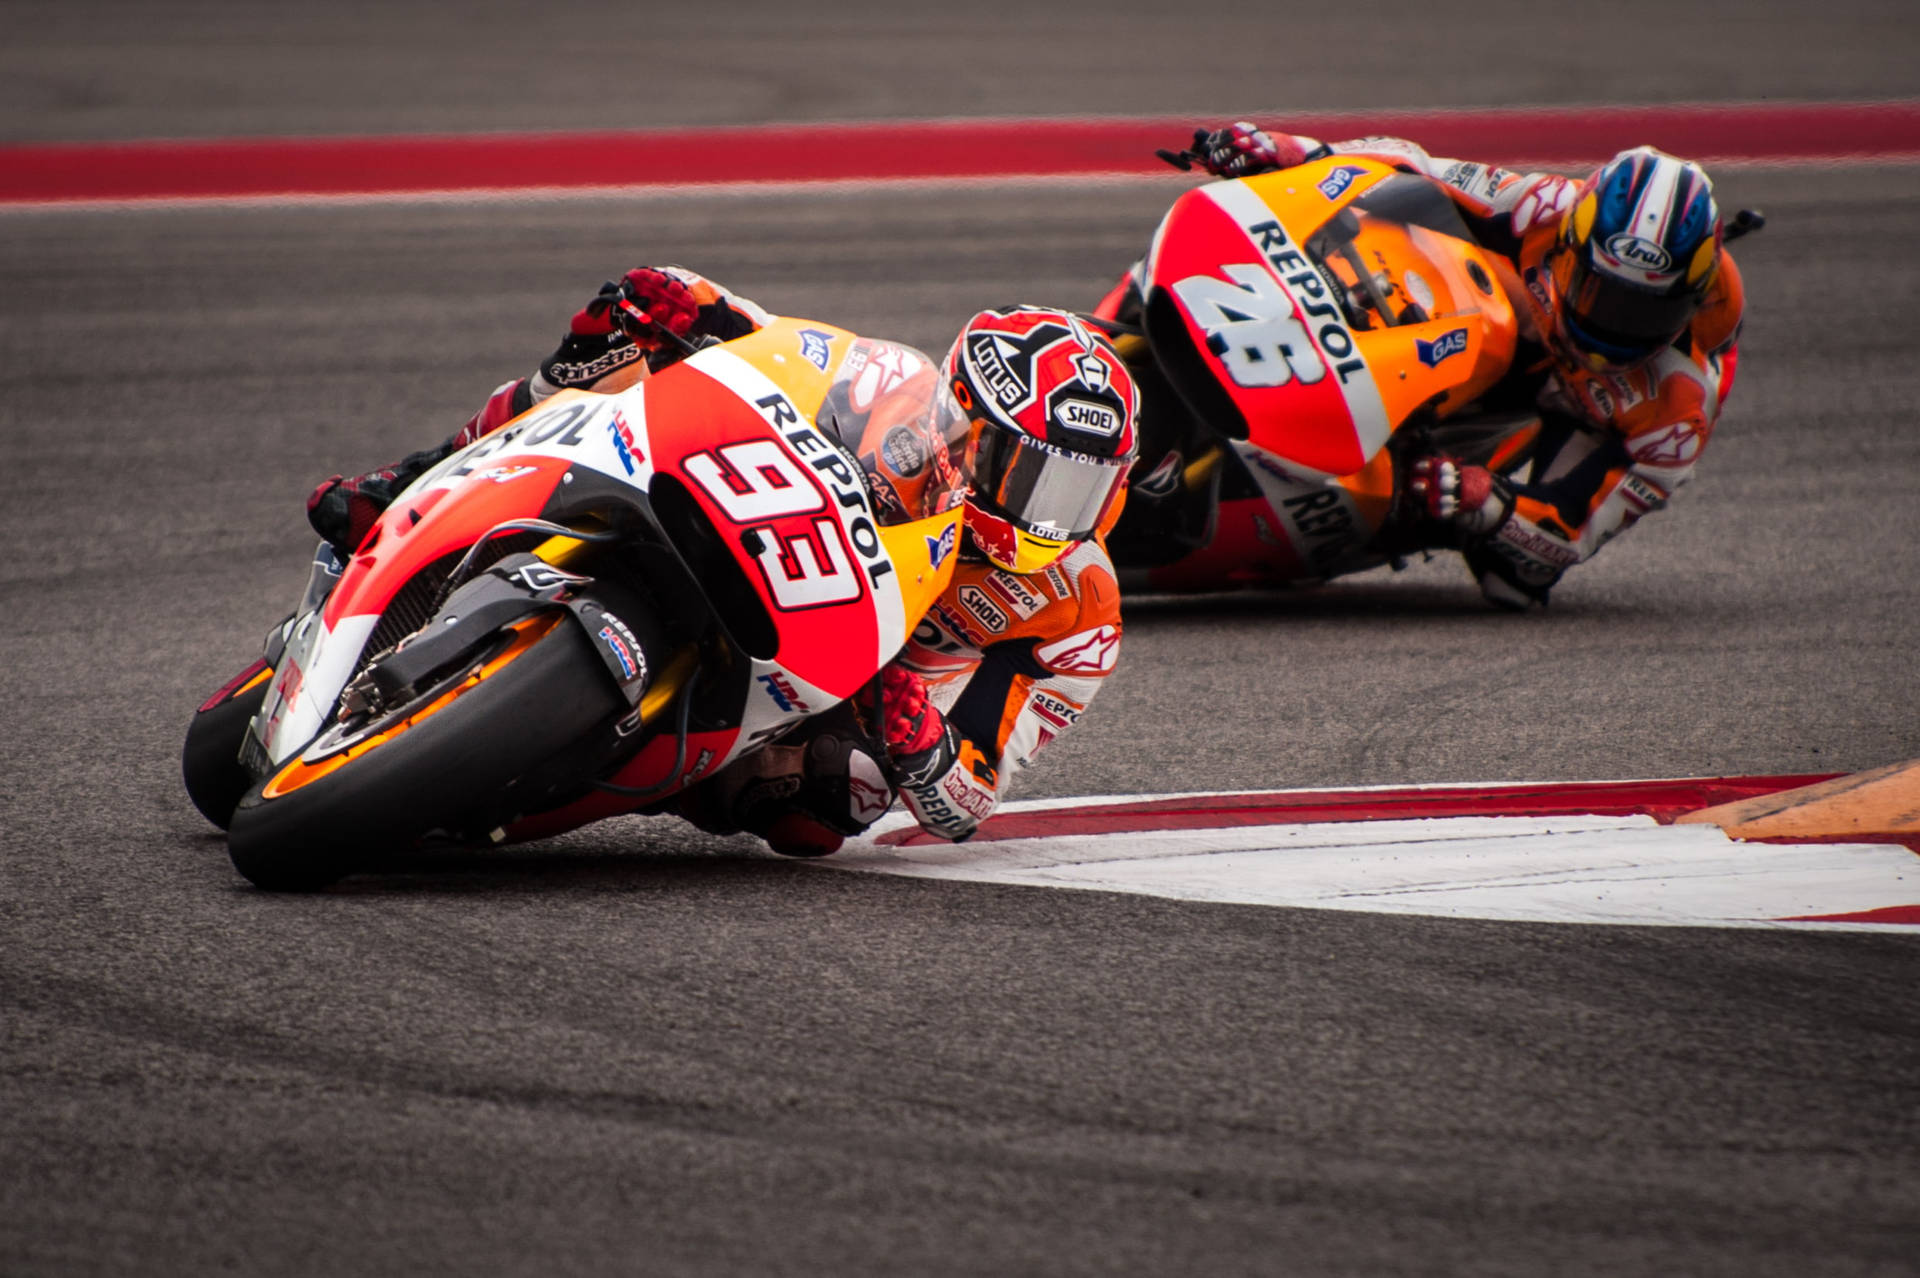 Caption: Intense Motogp Race With Marquez And Pedrosa